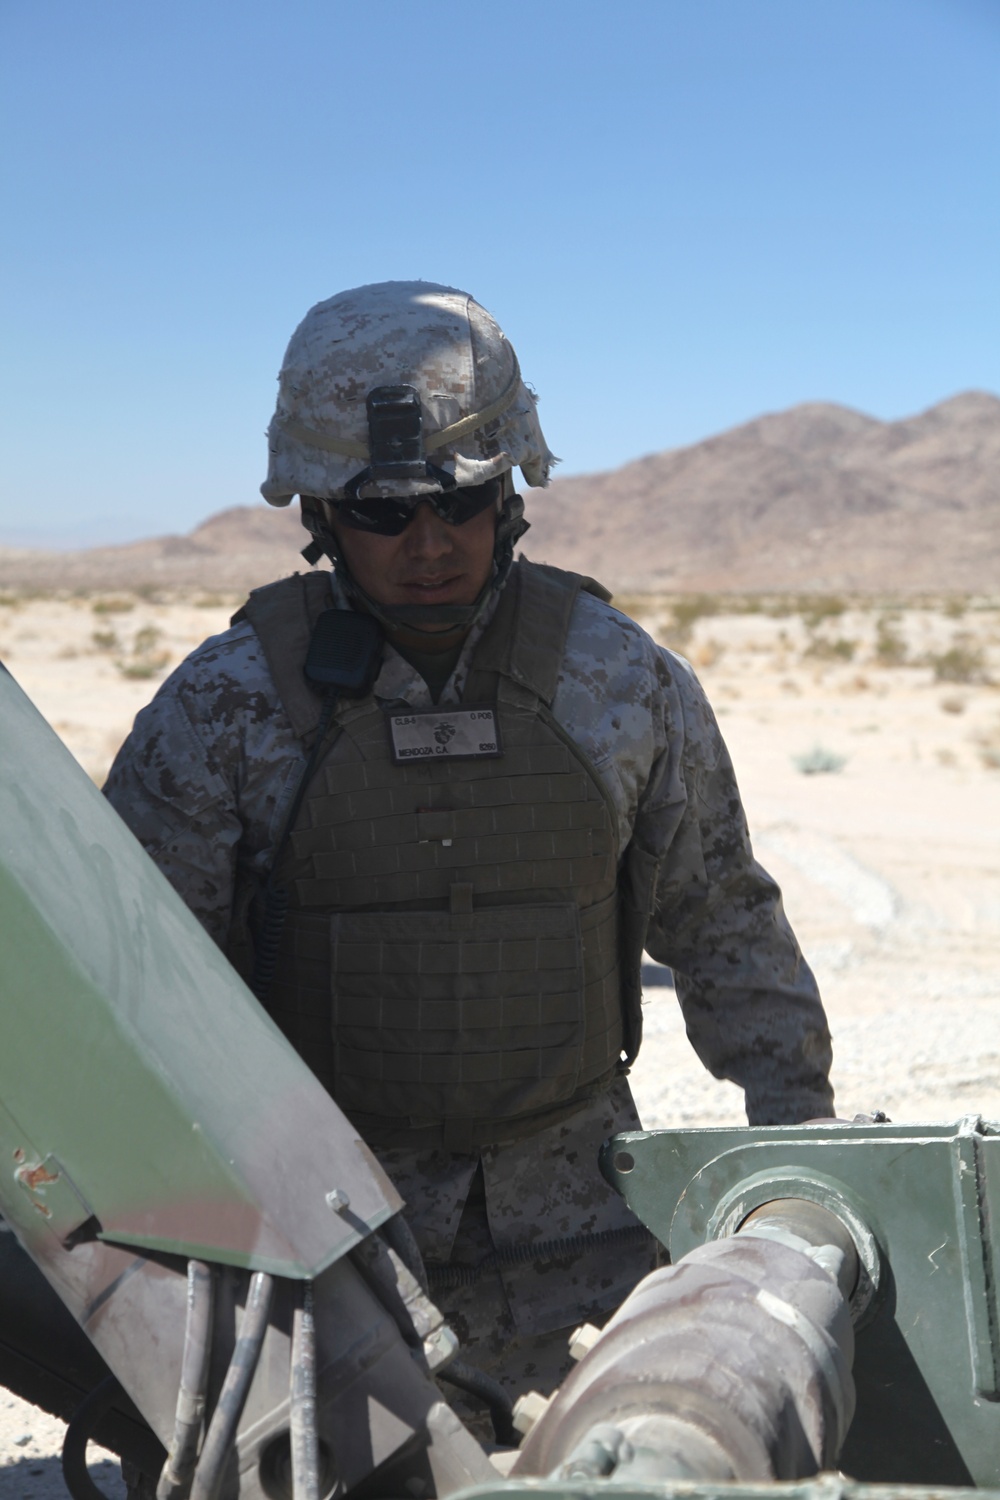 CLB-7 patrols through Mojave desert